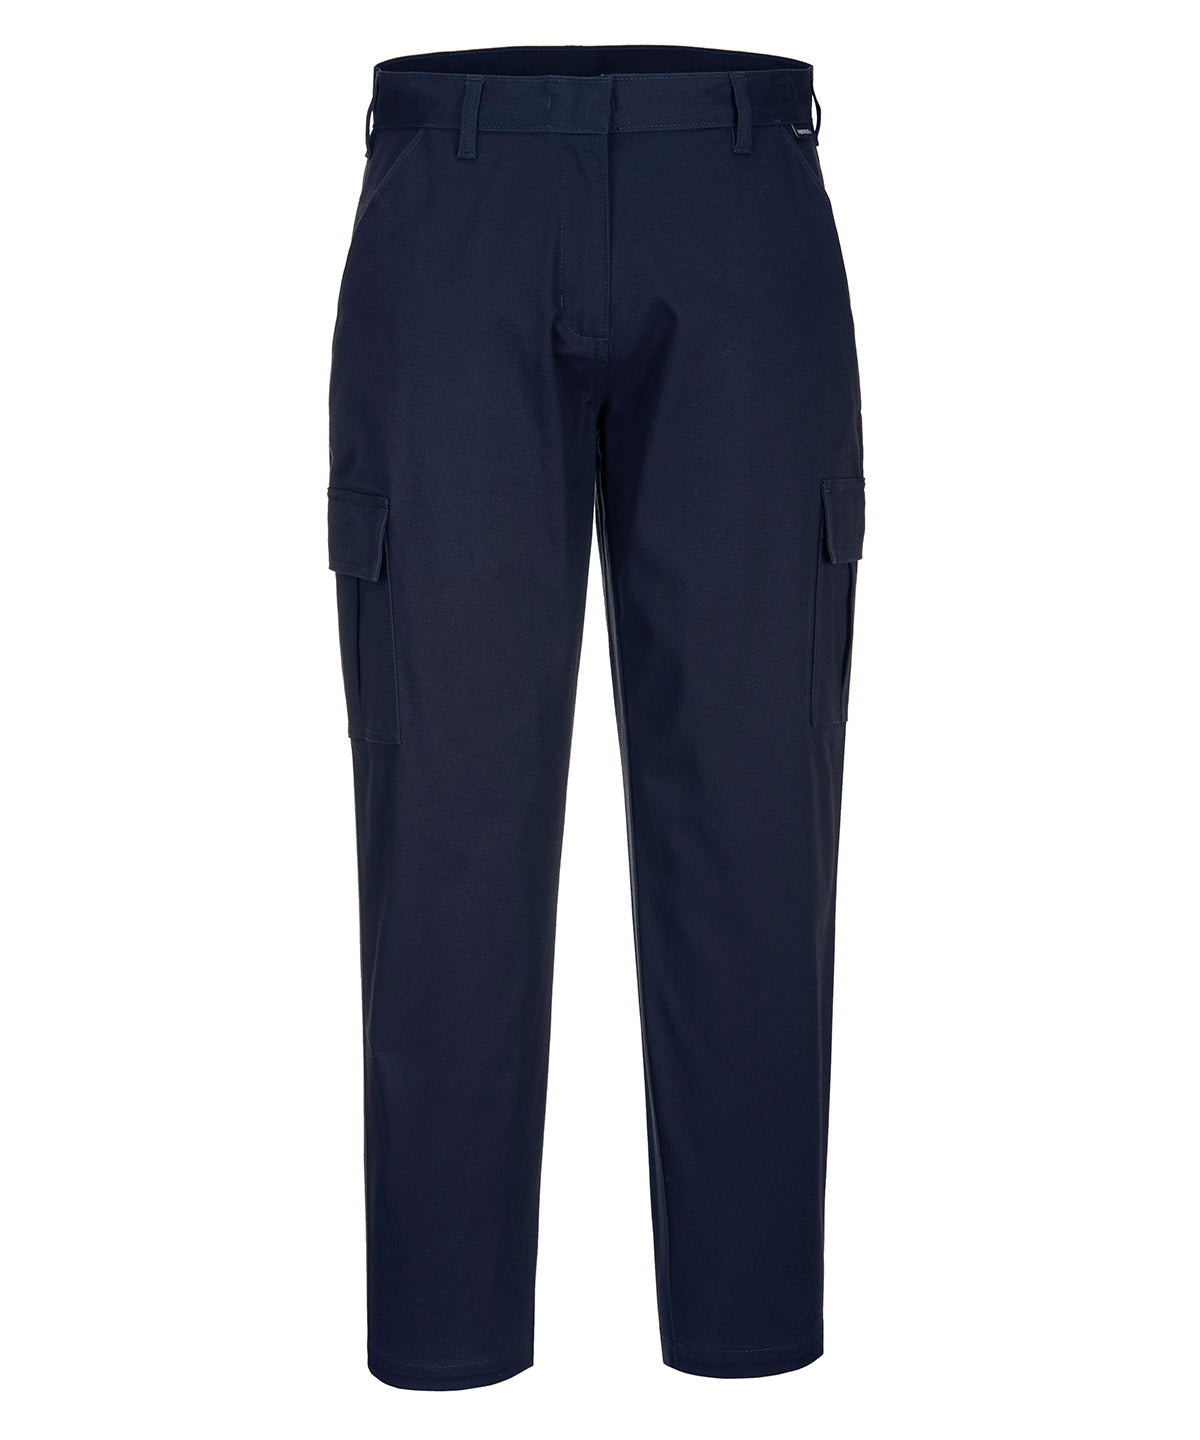 Buxur - Women's Stretch Cargo Trousers (S233) Slim Fit